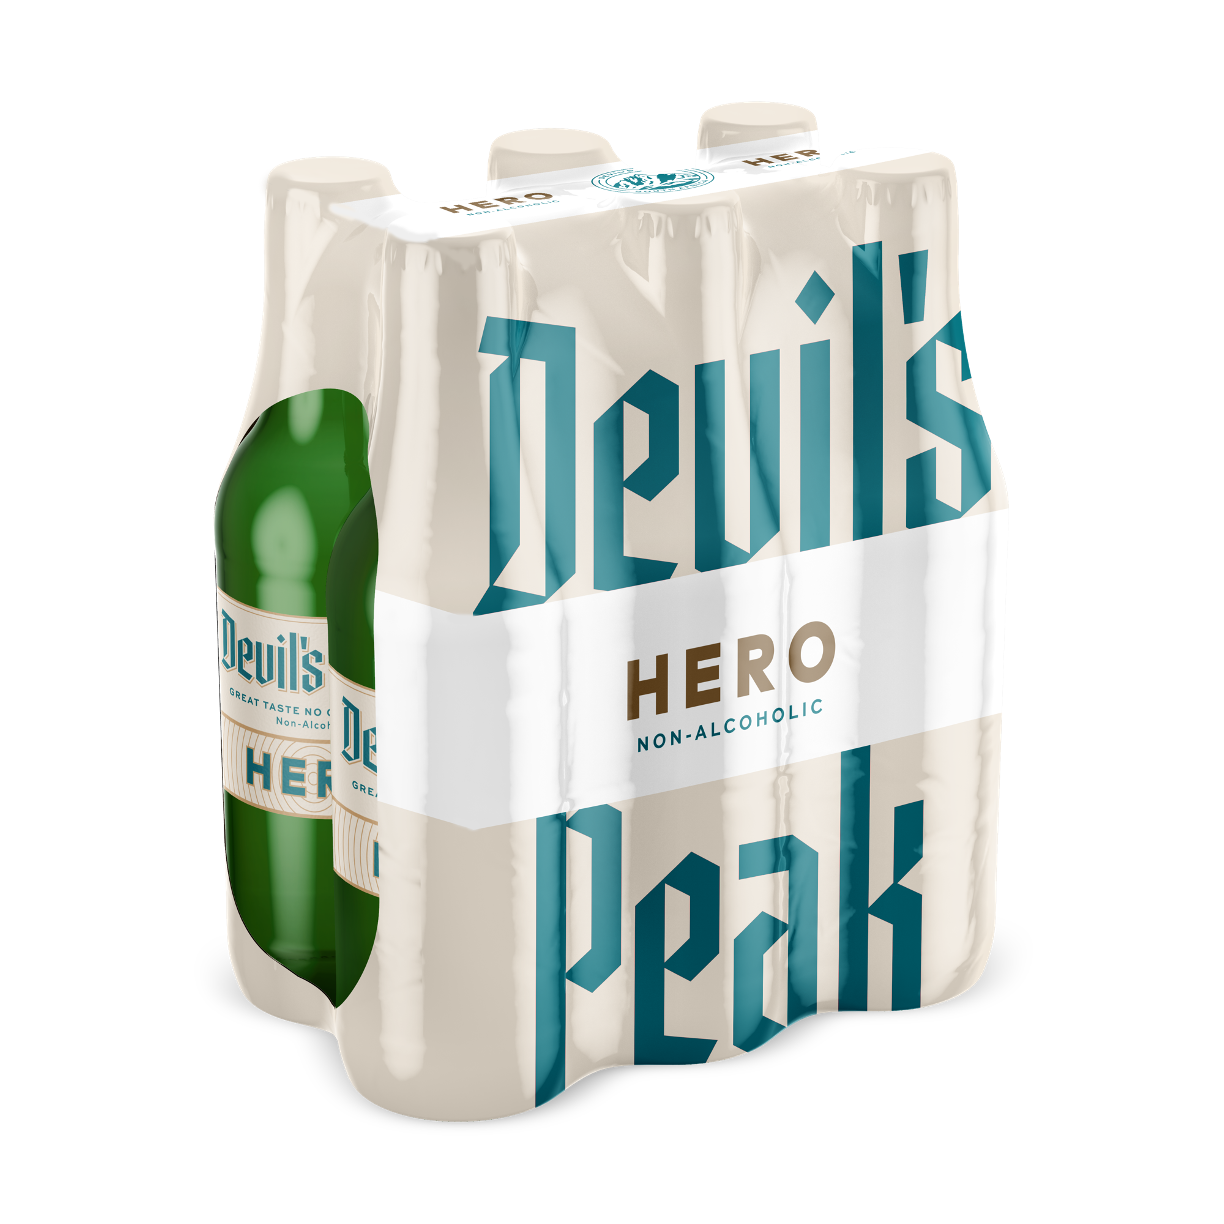 Devils Peak Hero Zero (6 x 330ml)